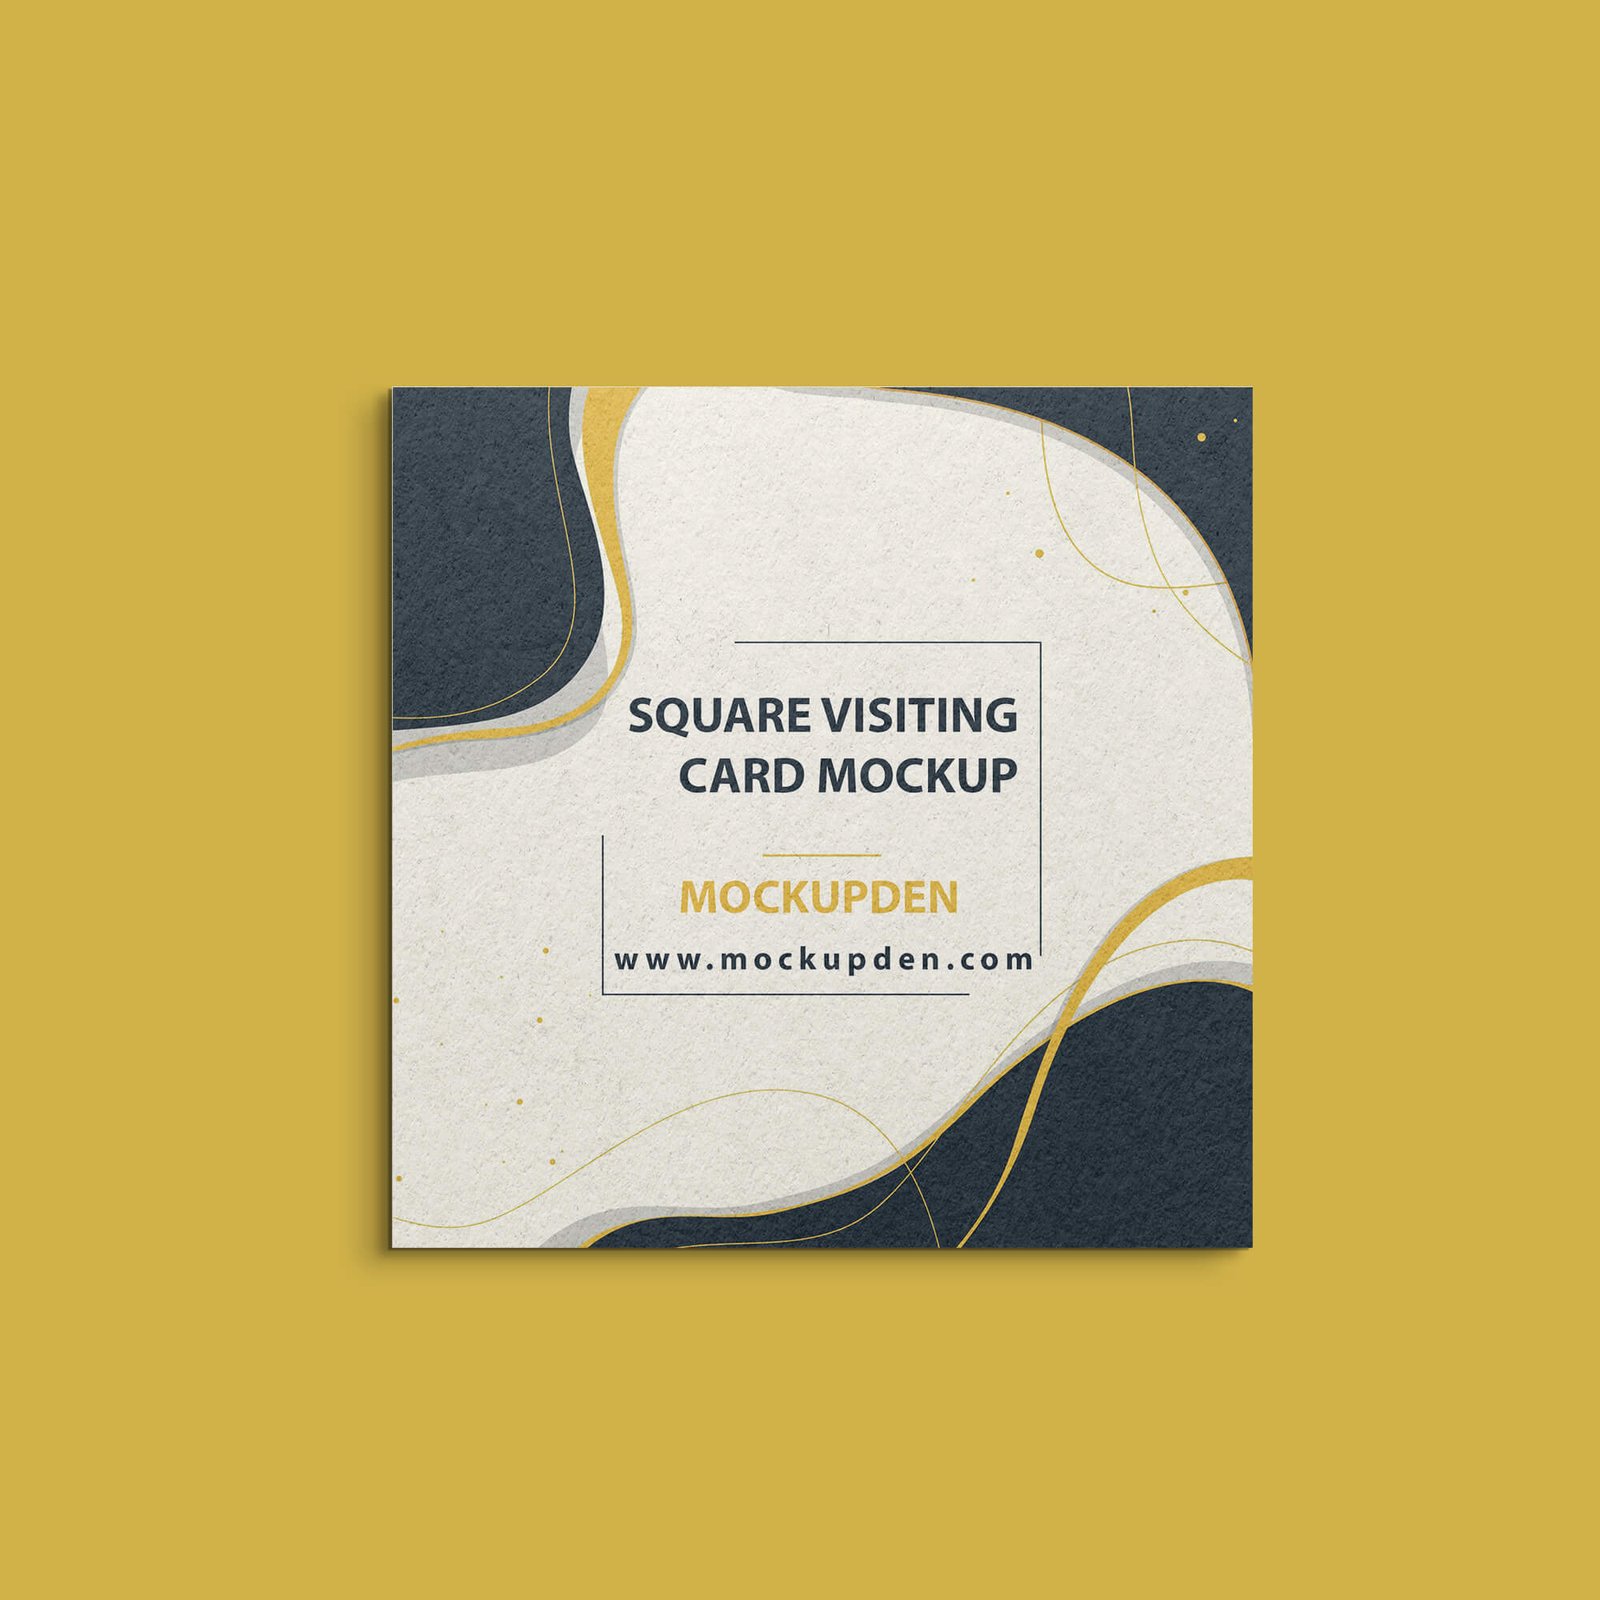 Design Free Square Visiting Card Mockup PSD Template